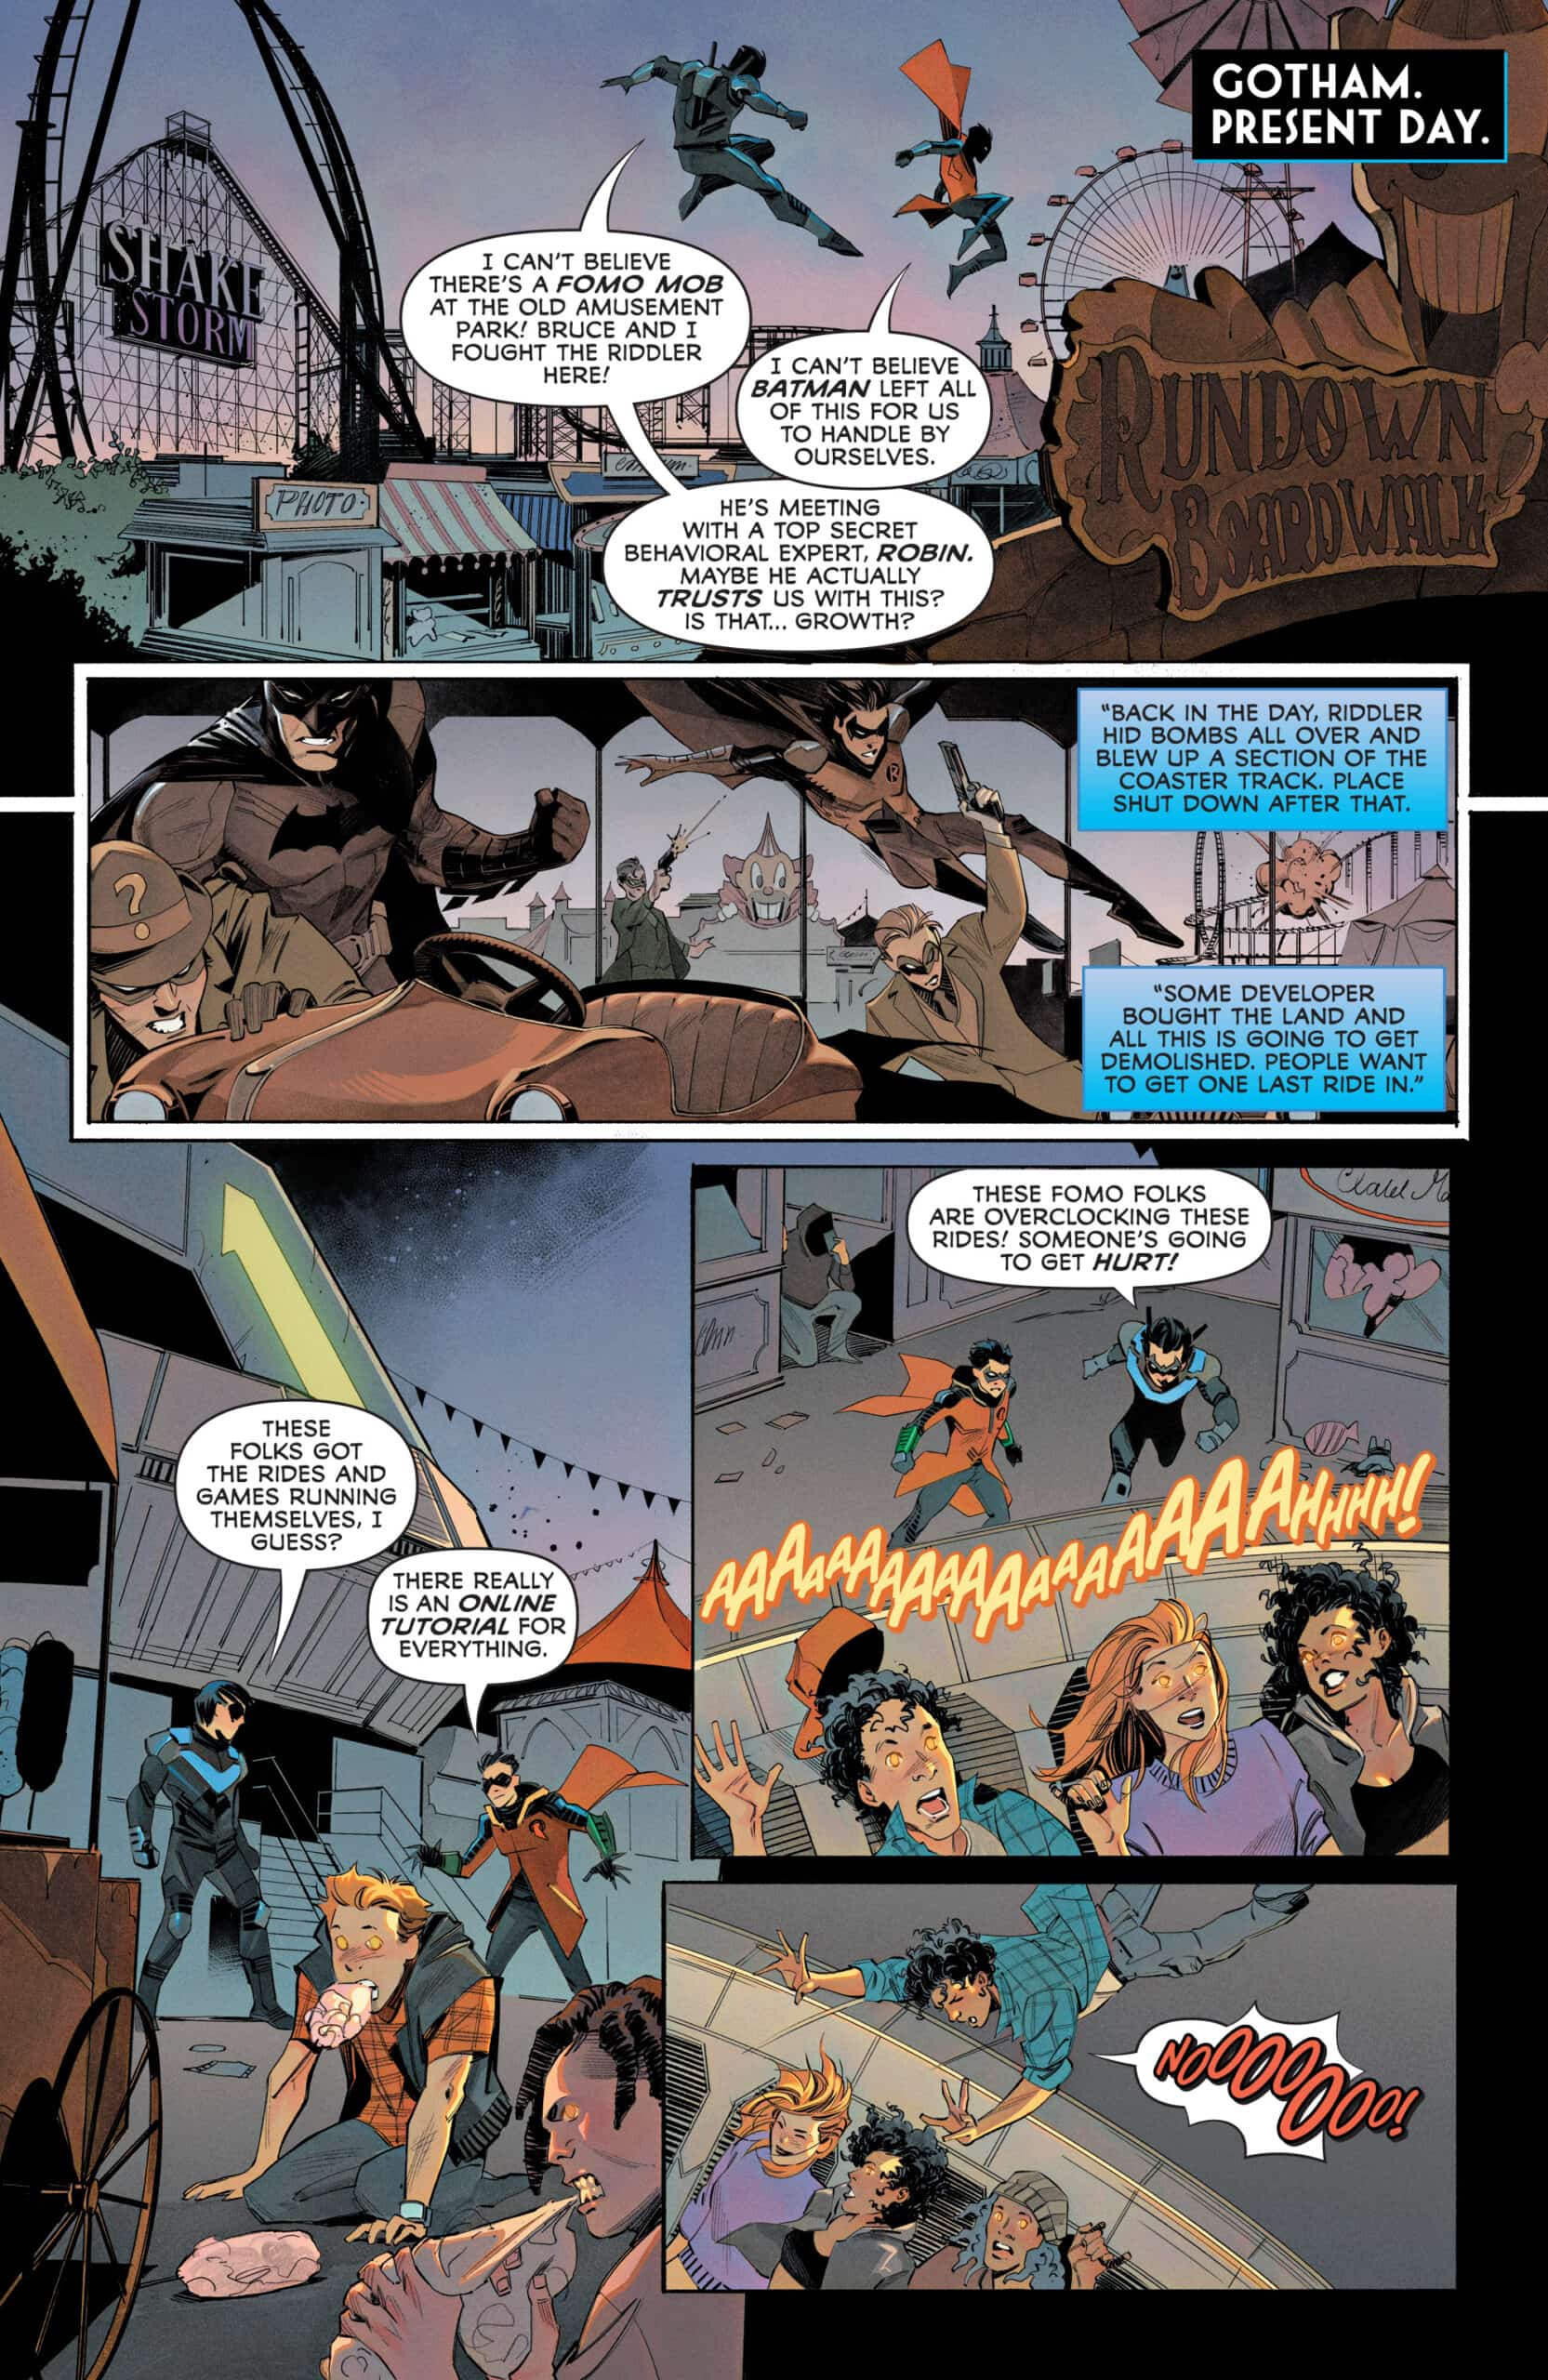 SDCC '22: BATMAN: GOTHAM KNIGHTS gets a prequel comic, GILDED CITY